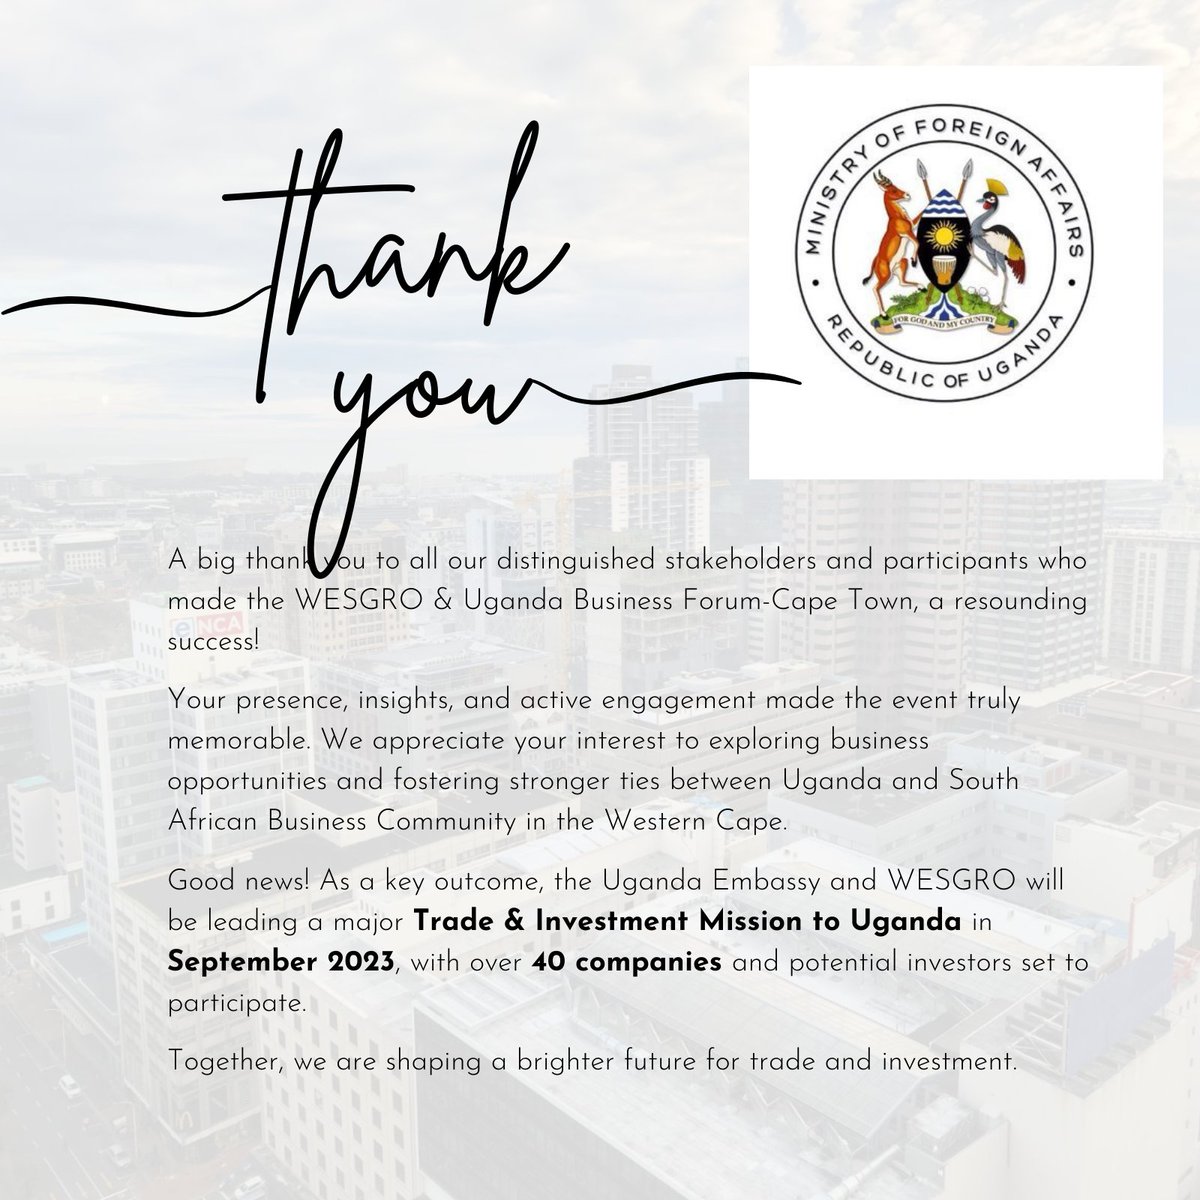 A big thankyou to our distinguished stakeholders and participants who made the WESGRO & Uganda Business Forum, a success! @Wesgro & @UgEmbassySA will lead a major Trade & Investment Mission to Uganda in Sep 2023, 
@UgandaMFA @UgandaMediaCent @URAuganda  @GovUganda @UgandaInvest